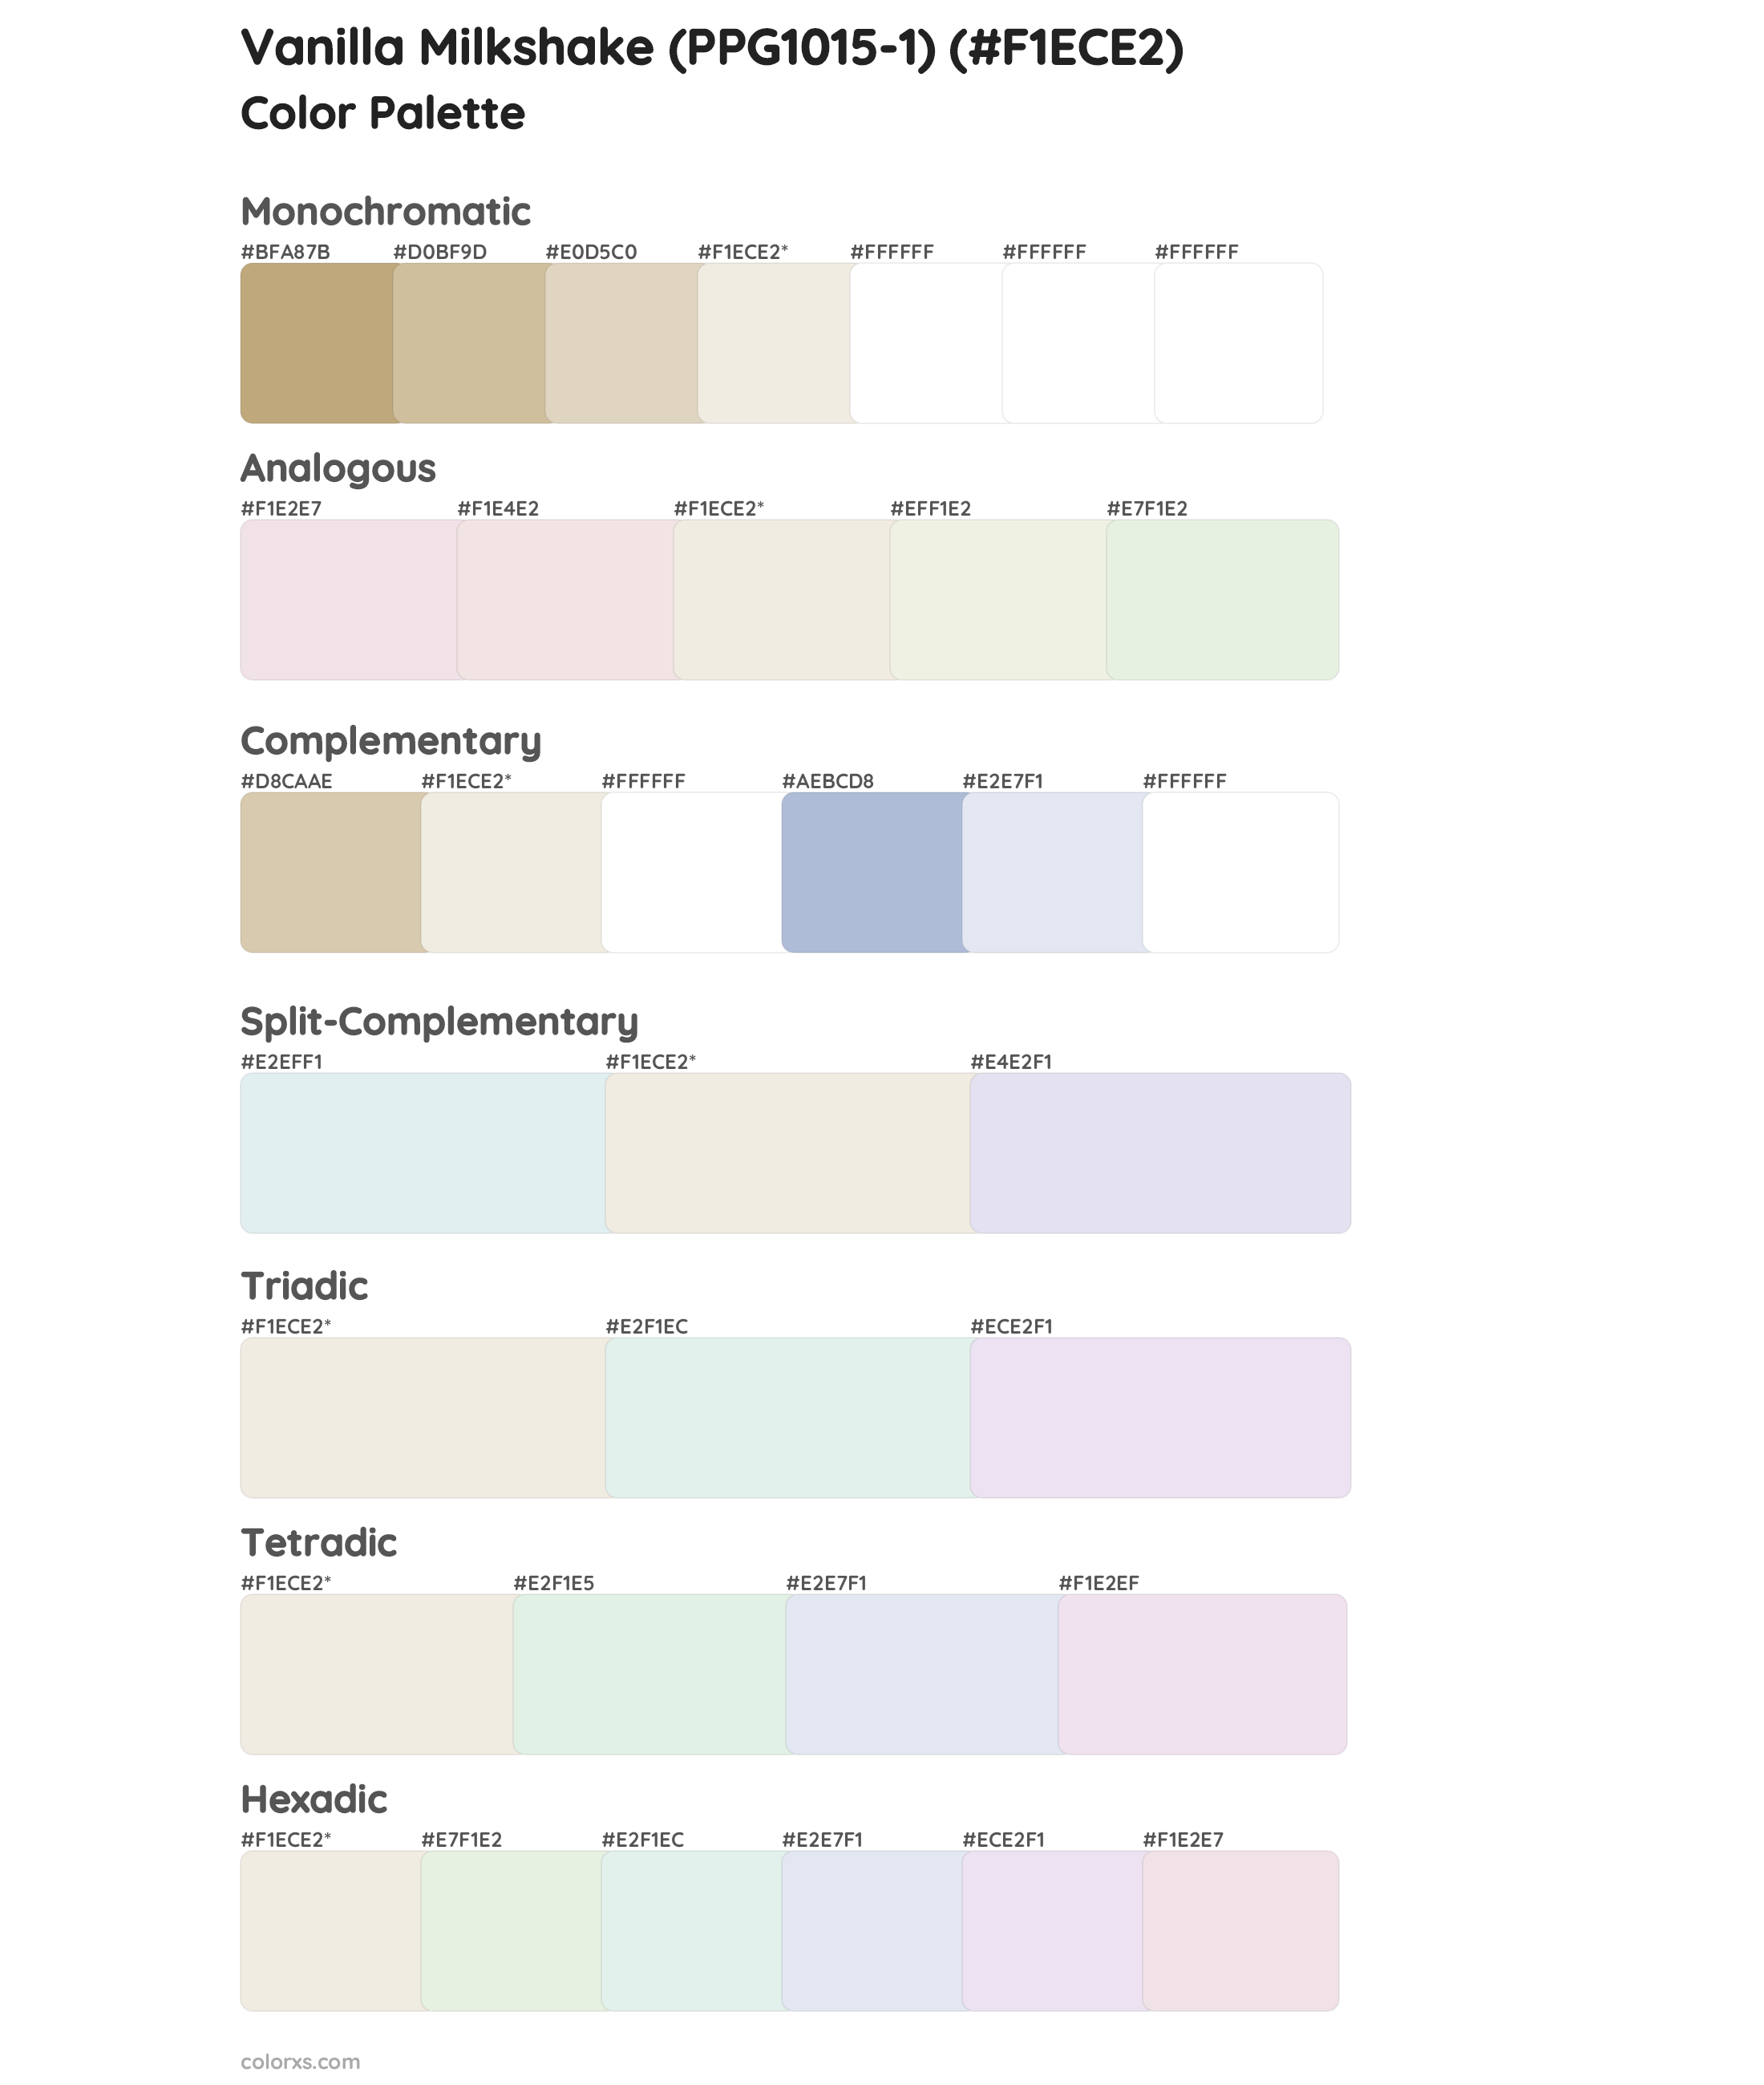 Vanilla Milkshake (PPG1015-1) Color Scheme Palettes